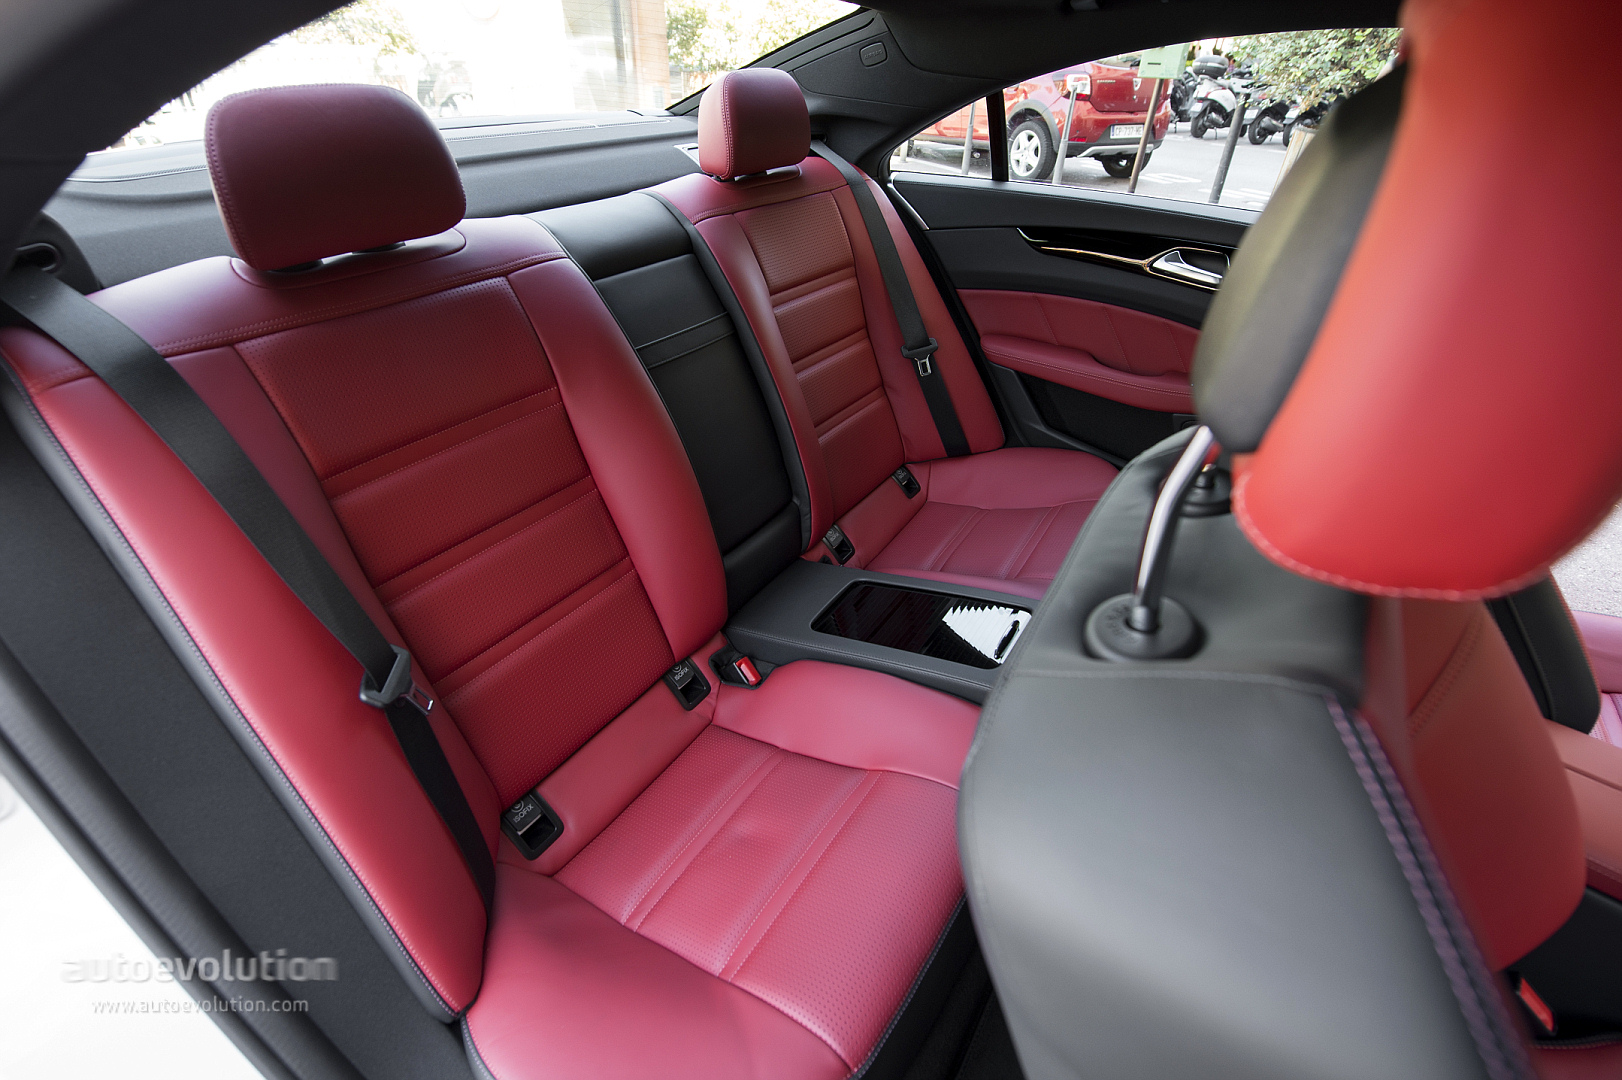 2014 Mercedes Benz Cls63 Amg 4matic Review Autoevolution